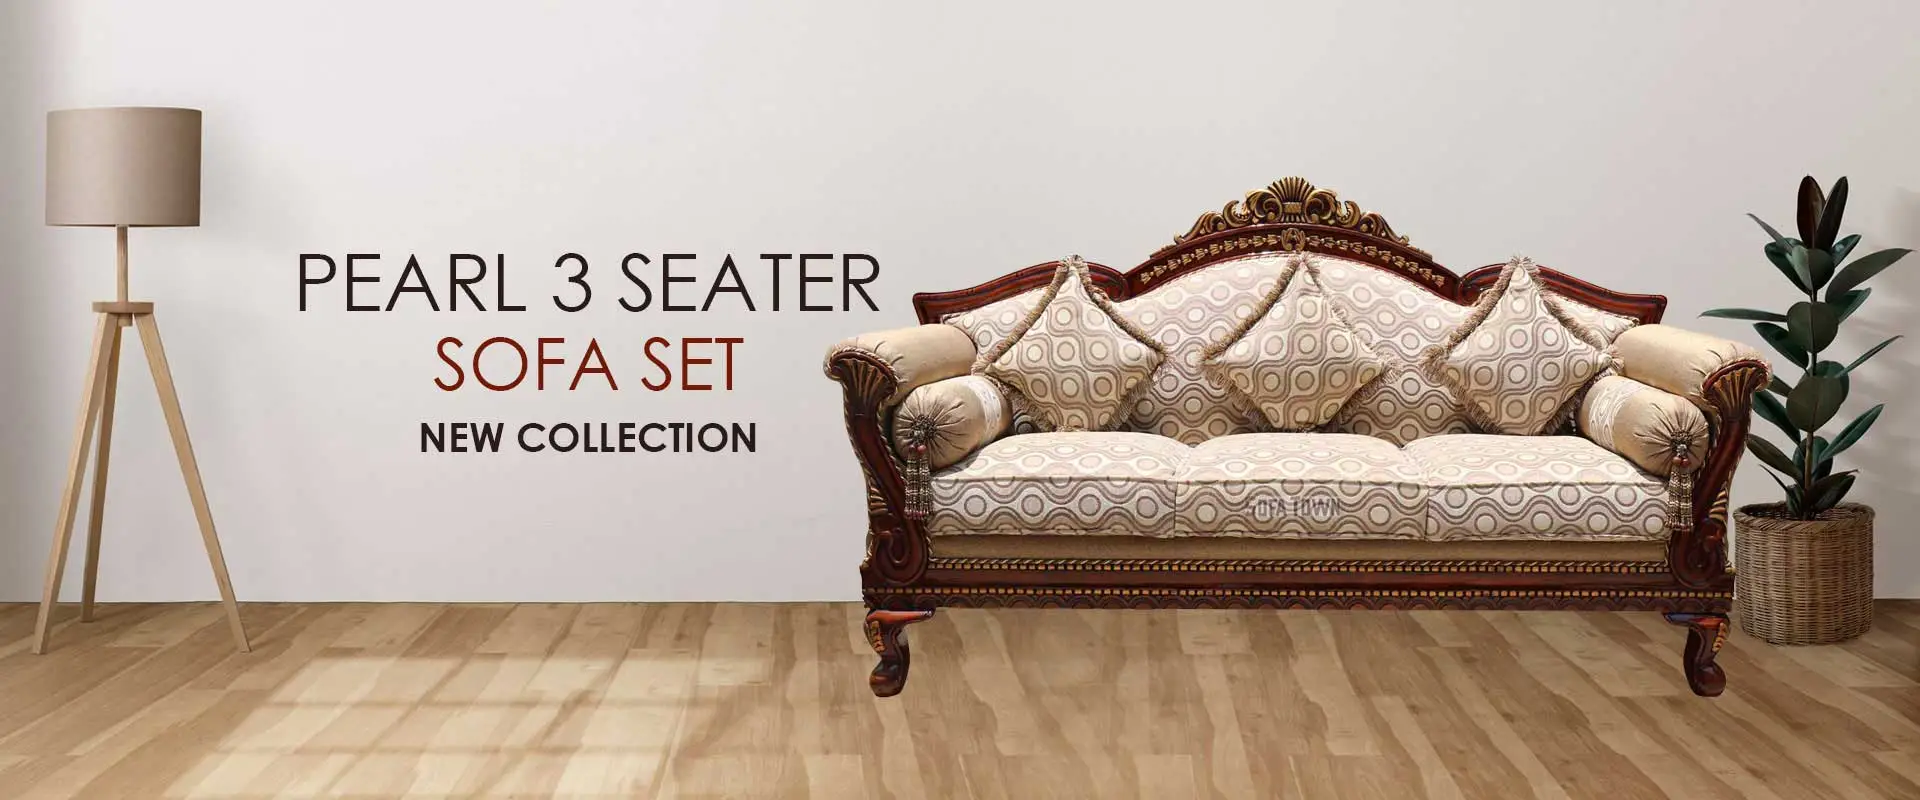 Pearl 3 Seater Sofa Set  Manufacturers in Surendranagar